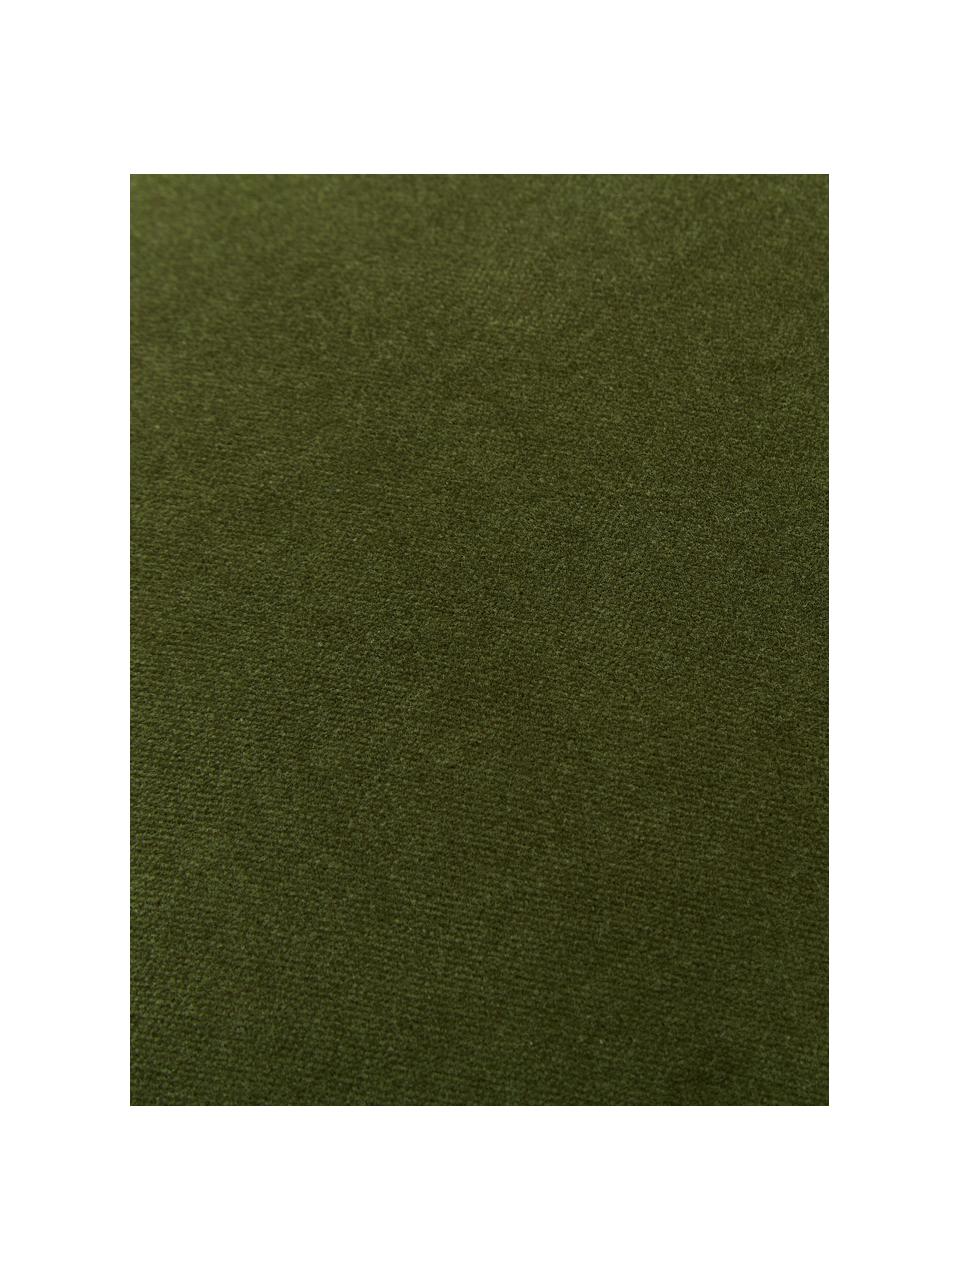 Einfarbige Samt-Kissenhülle Dana in Moosgrün, 100% Baumwollsamt, Moosgrün, B 30 x L 50 cm